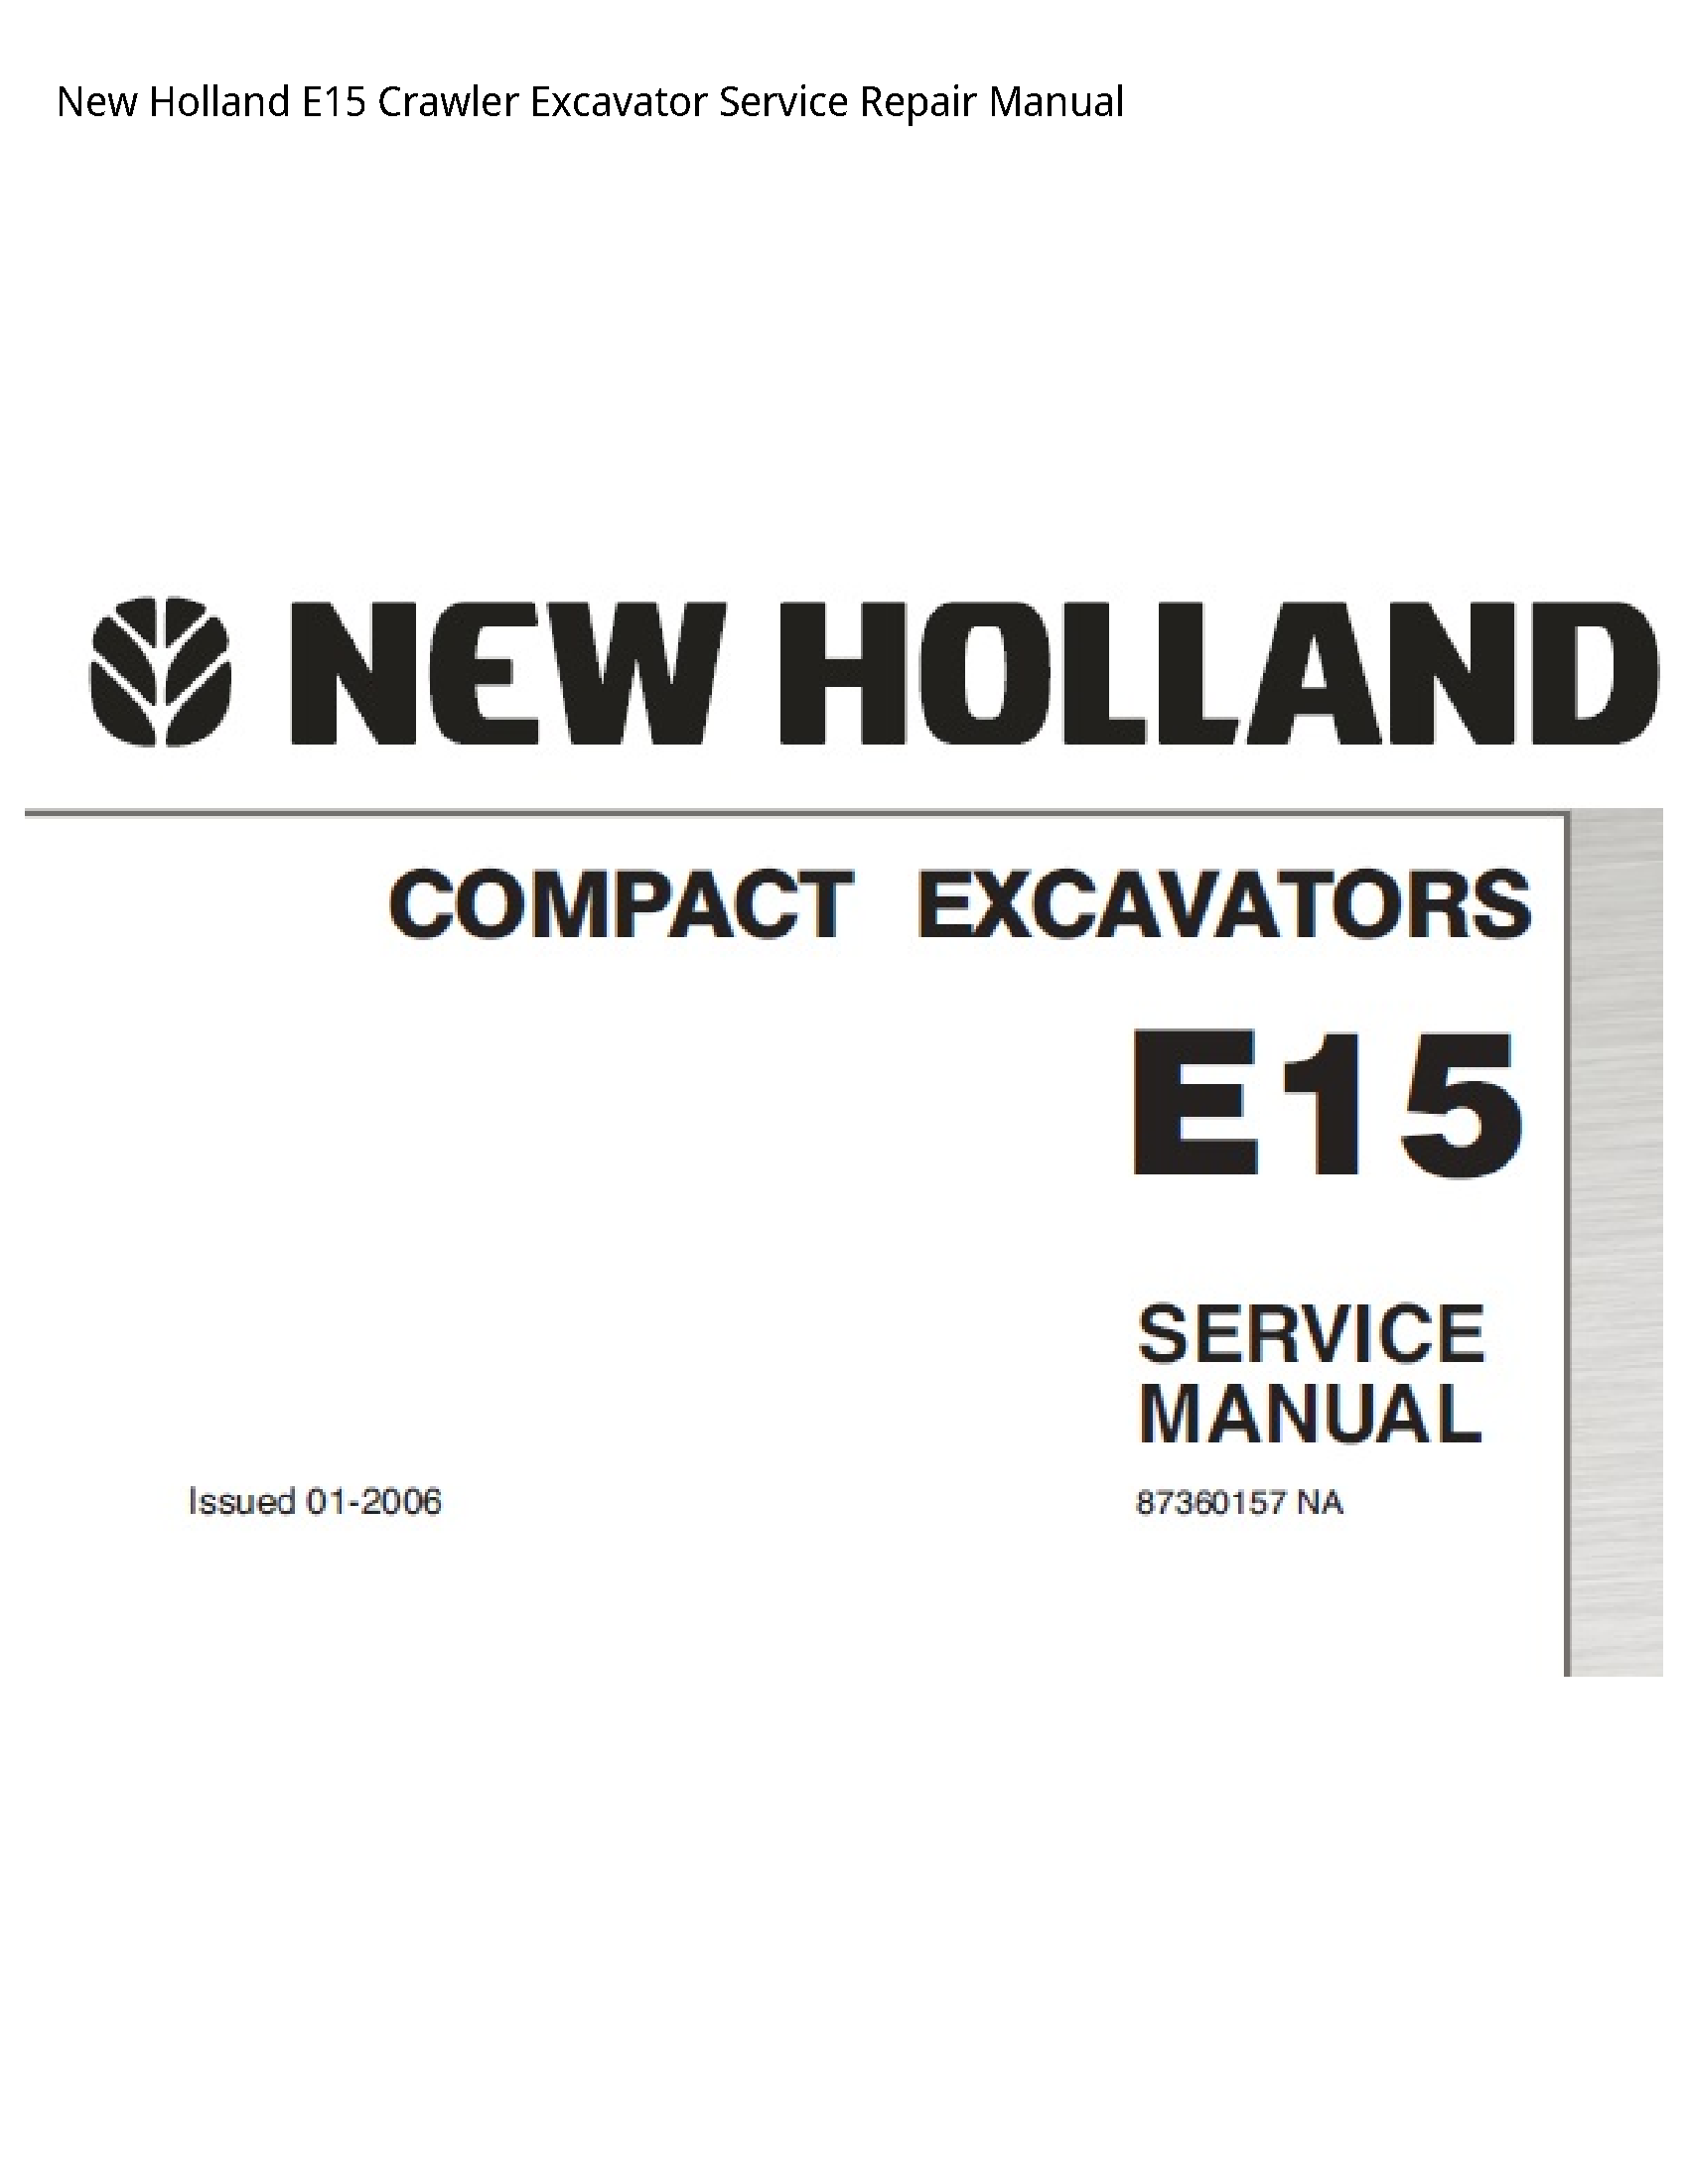 New Holland E15 Crawler Excavator manual